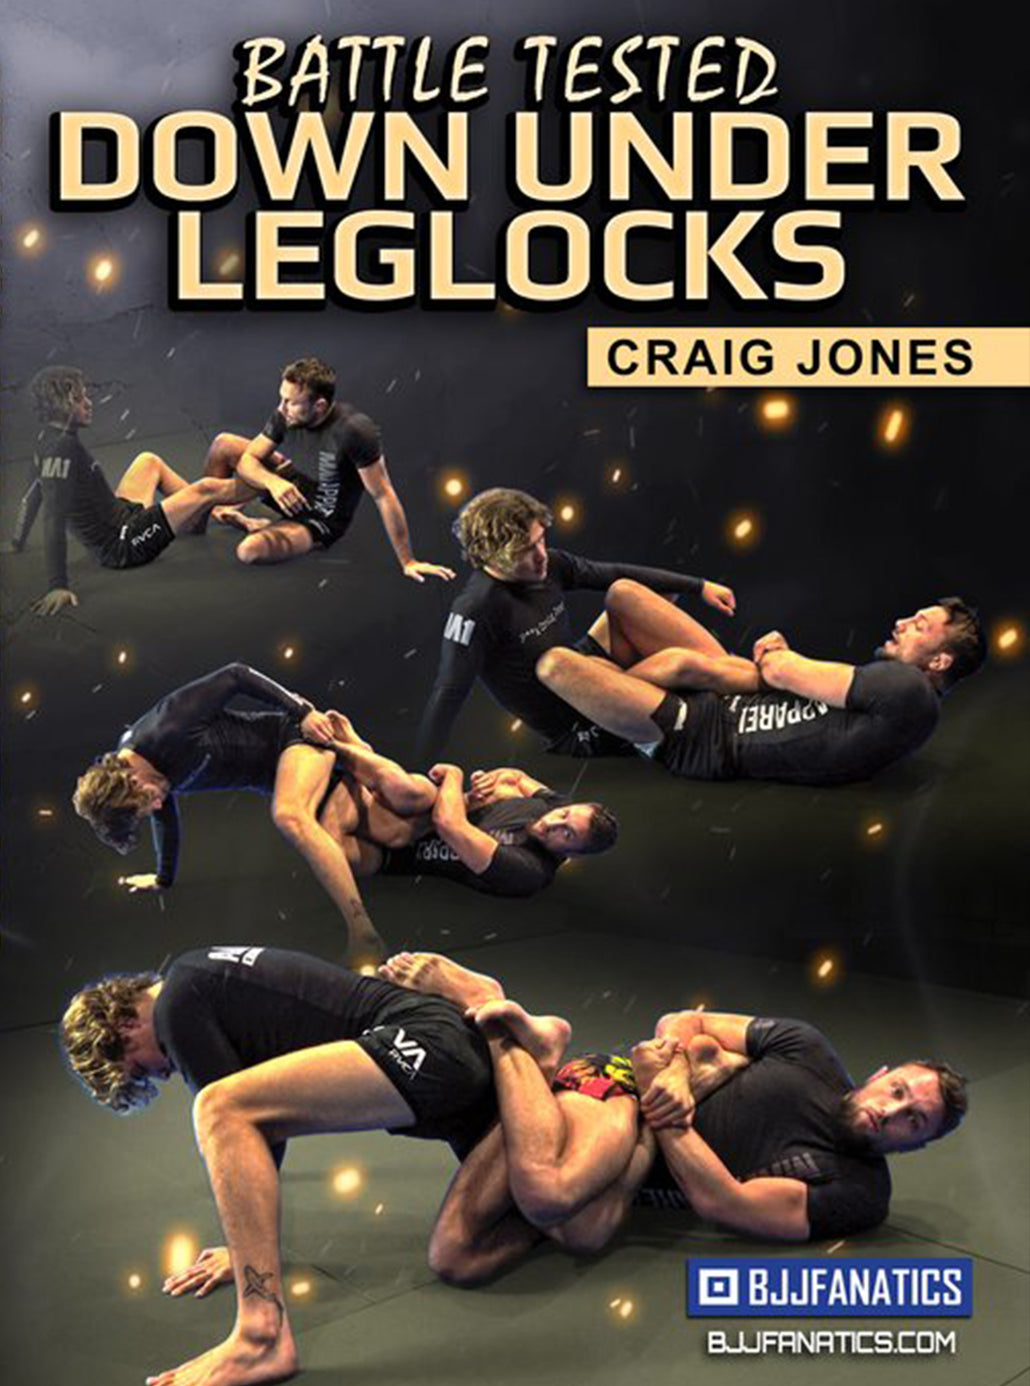 Battle Tested Down Under Leglocks by Craig Jones